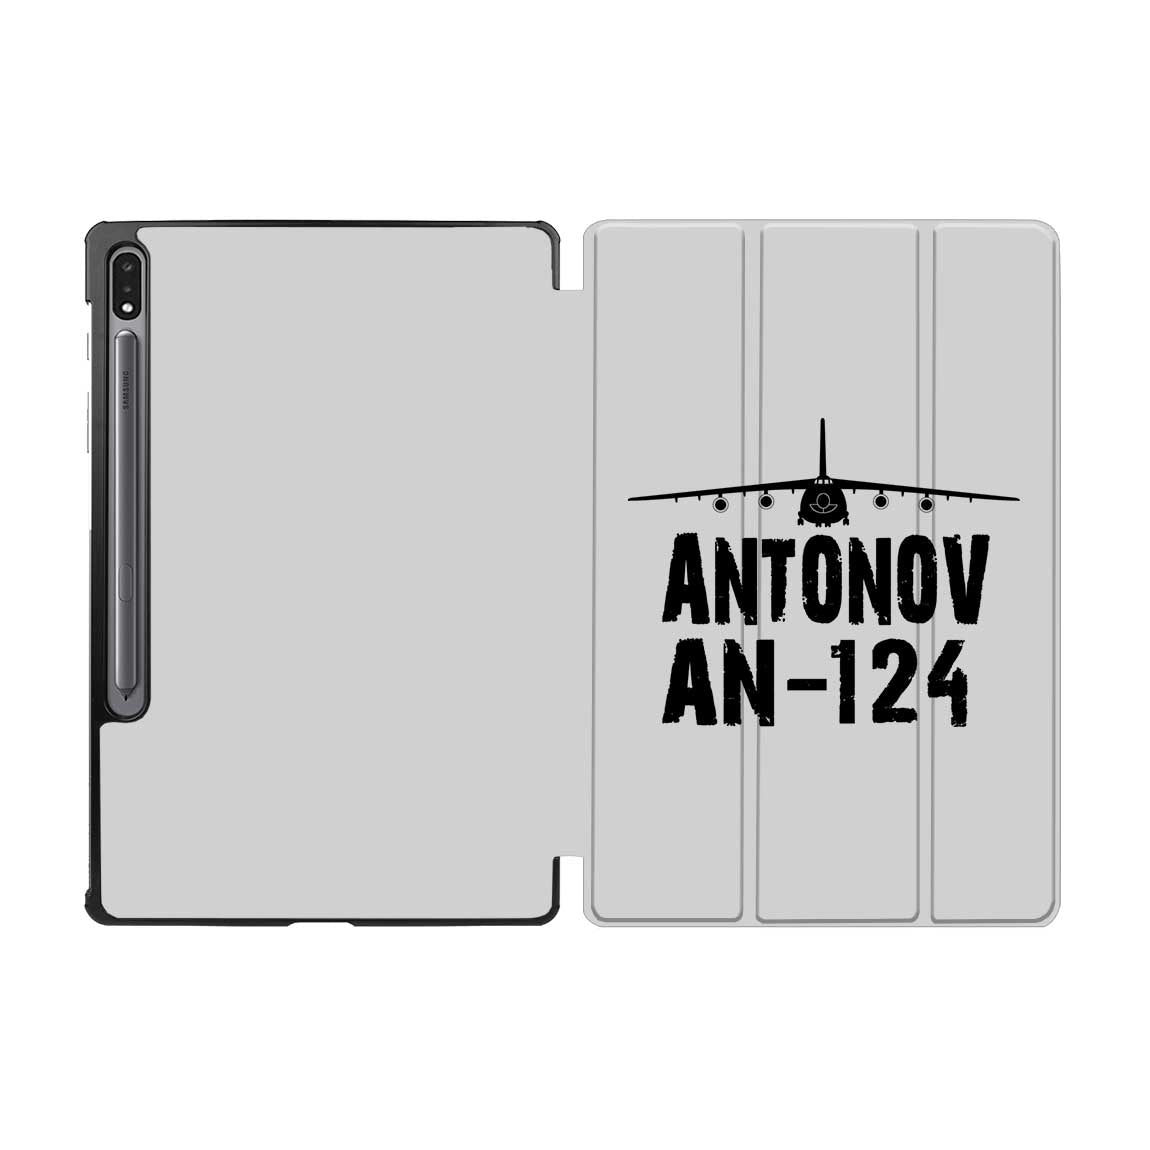 Antonov AN-124 & Plane Designed Samsung Tablet Cases